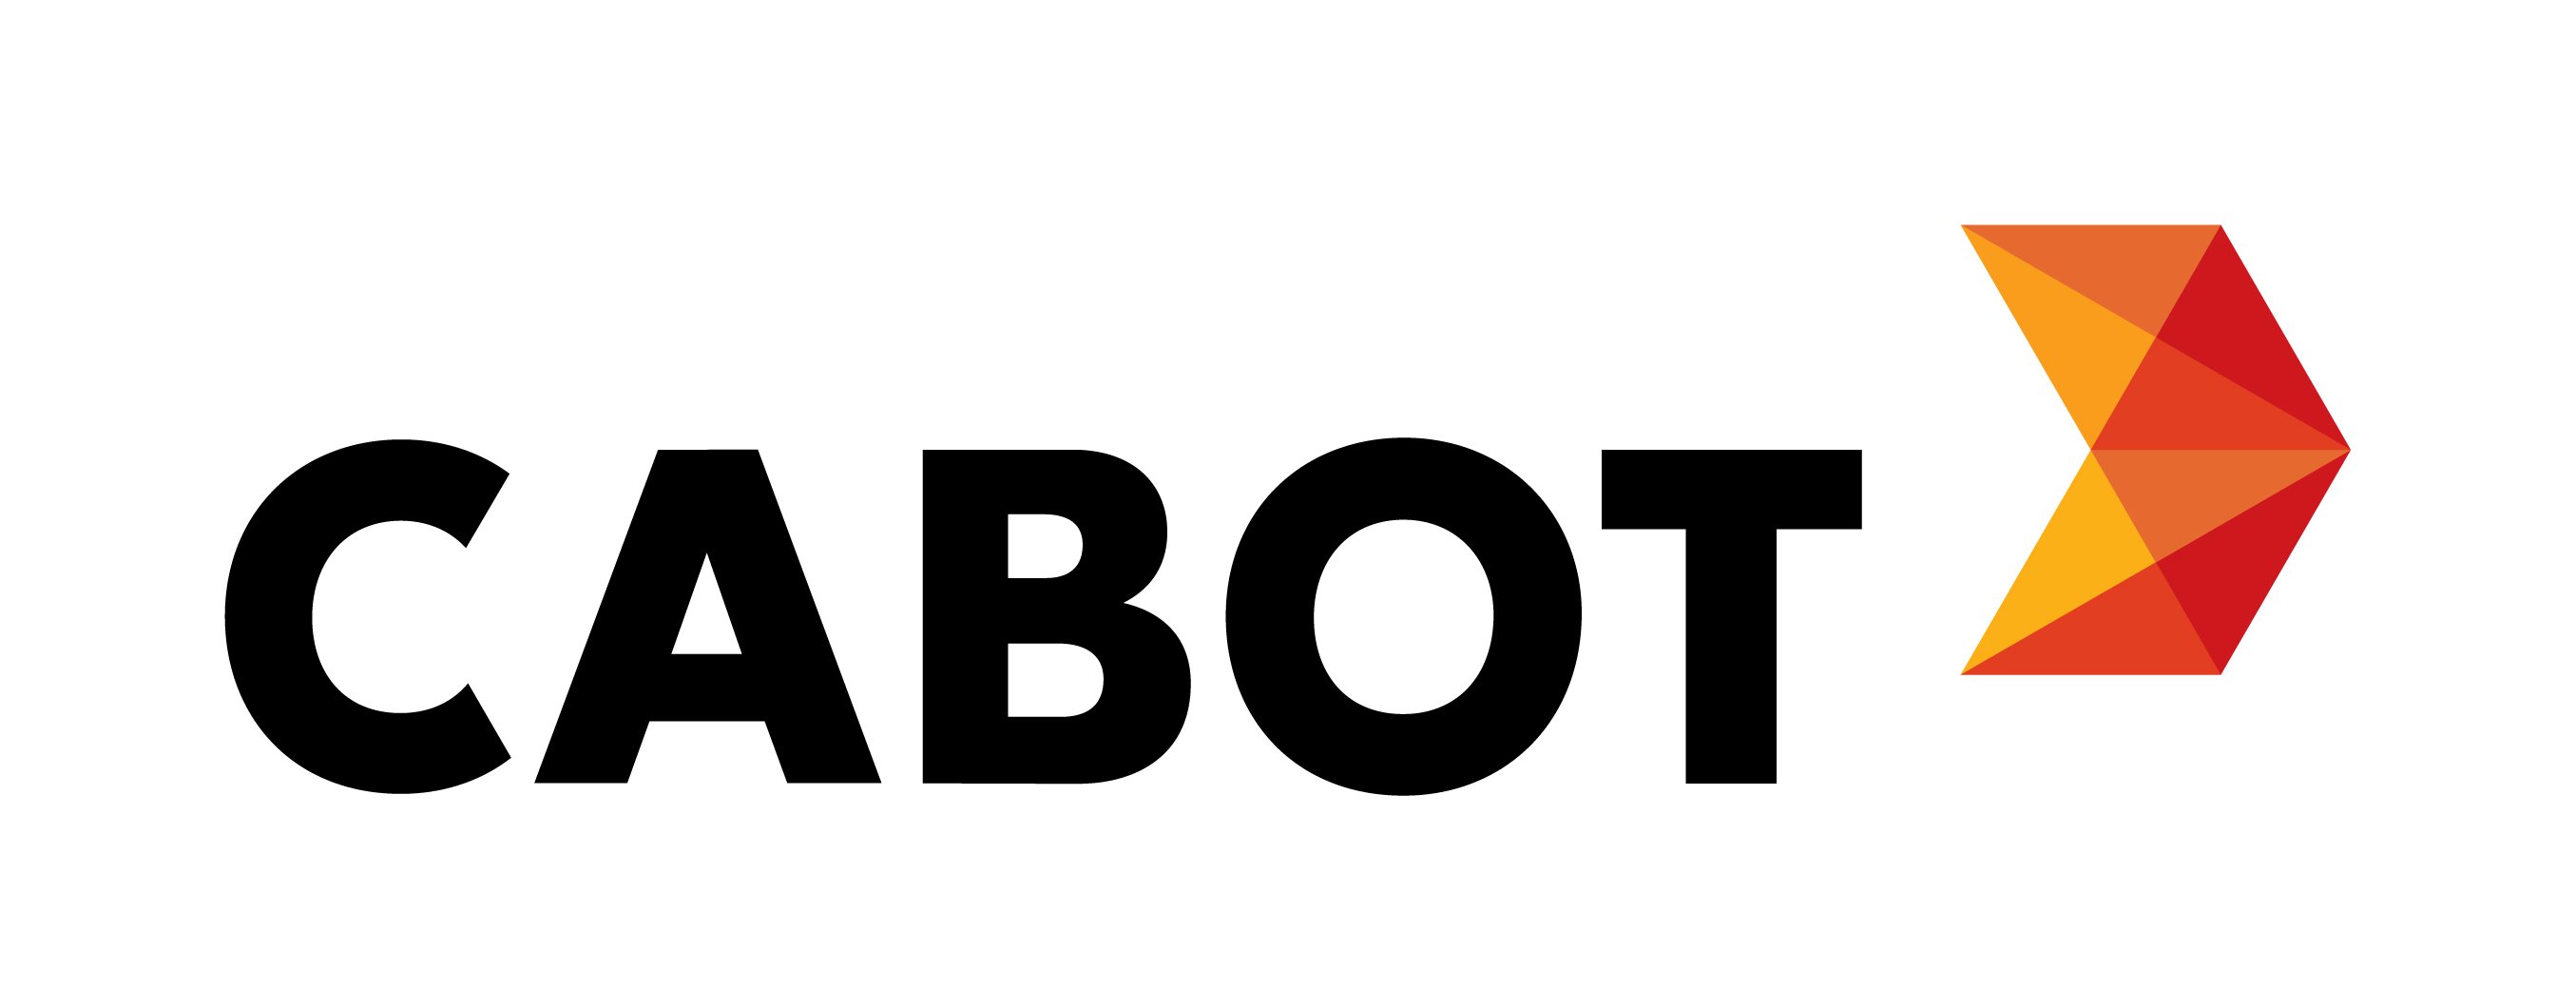 Cabot Corporation Trademarks & Logos